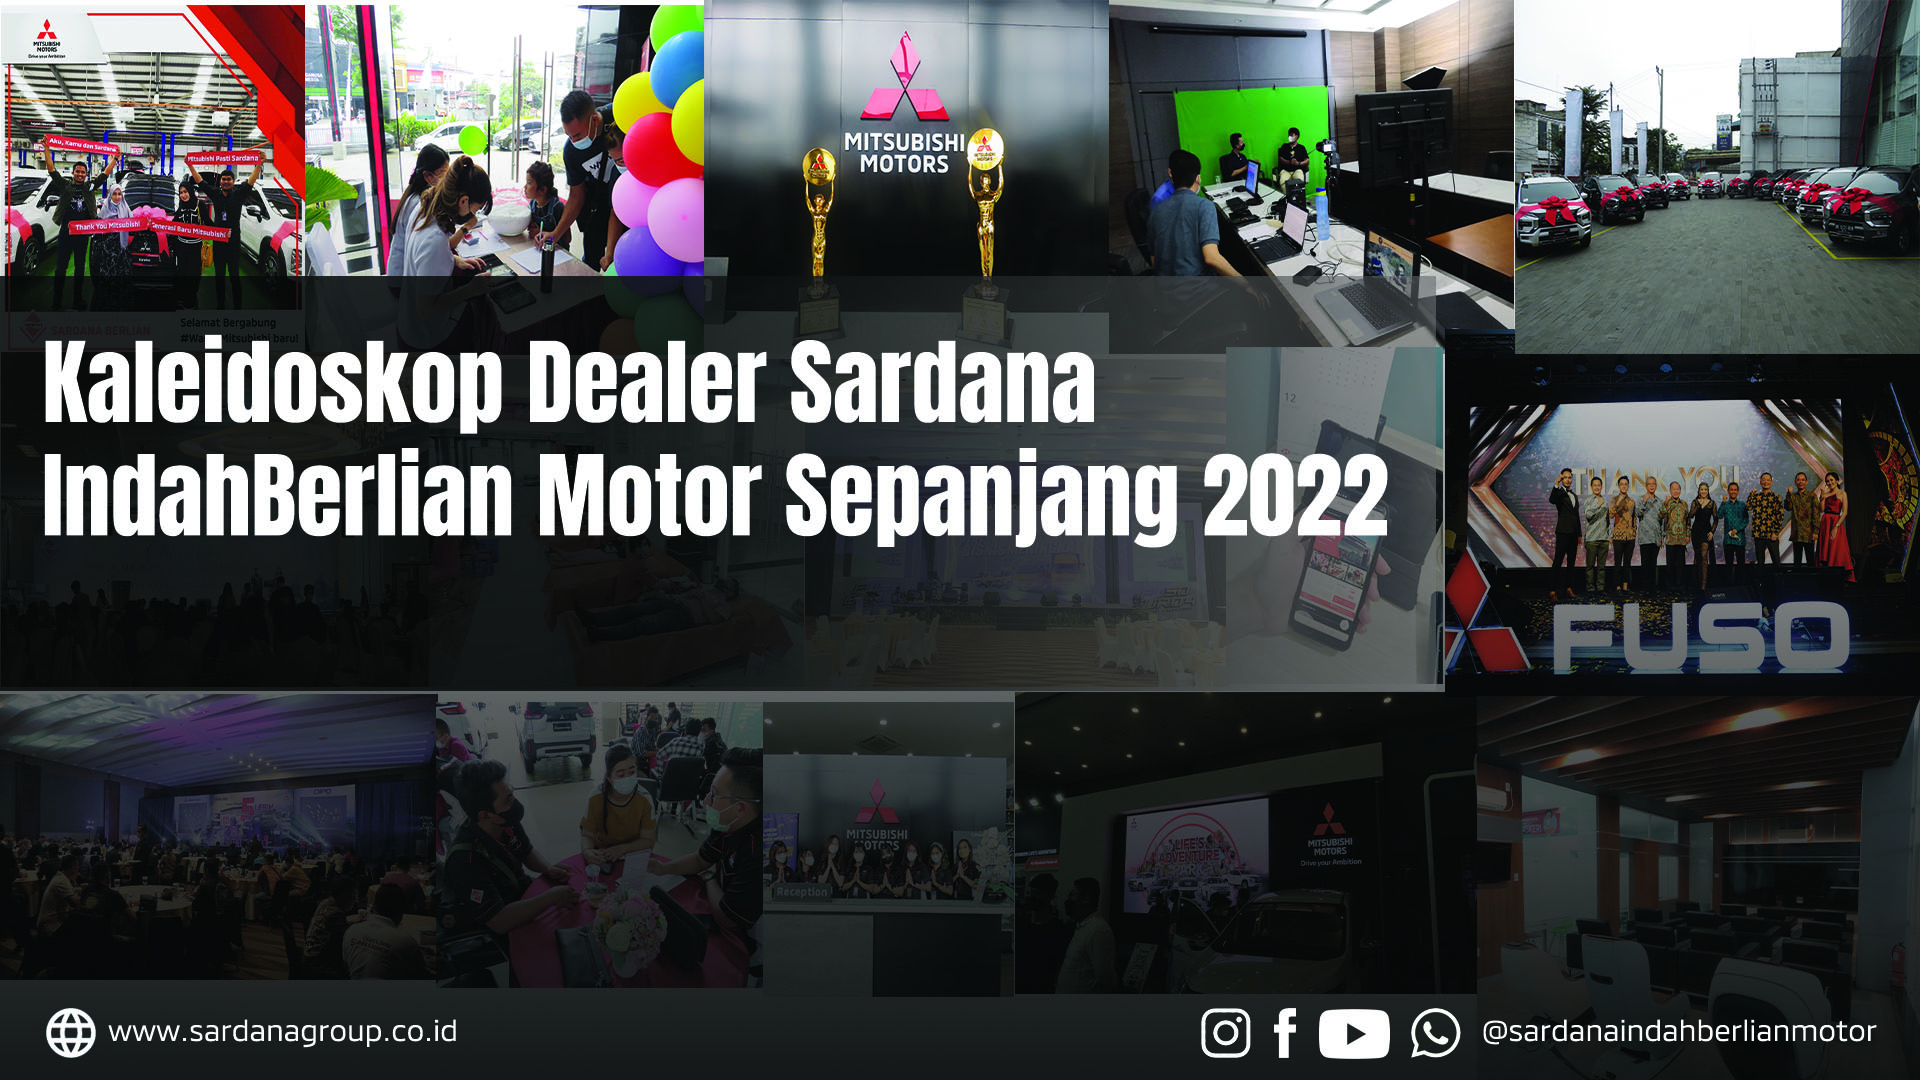 Kaleidoskop Dealer Sardana IndahBerlian Motor Sepanjang 2022, Apa Saja Momen Menariknya?